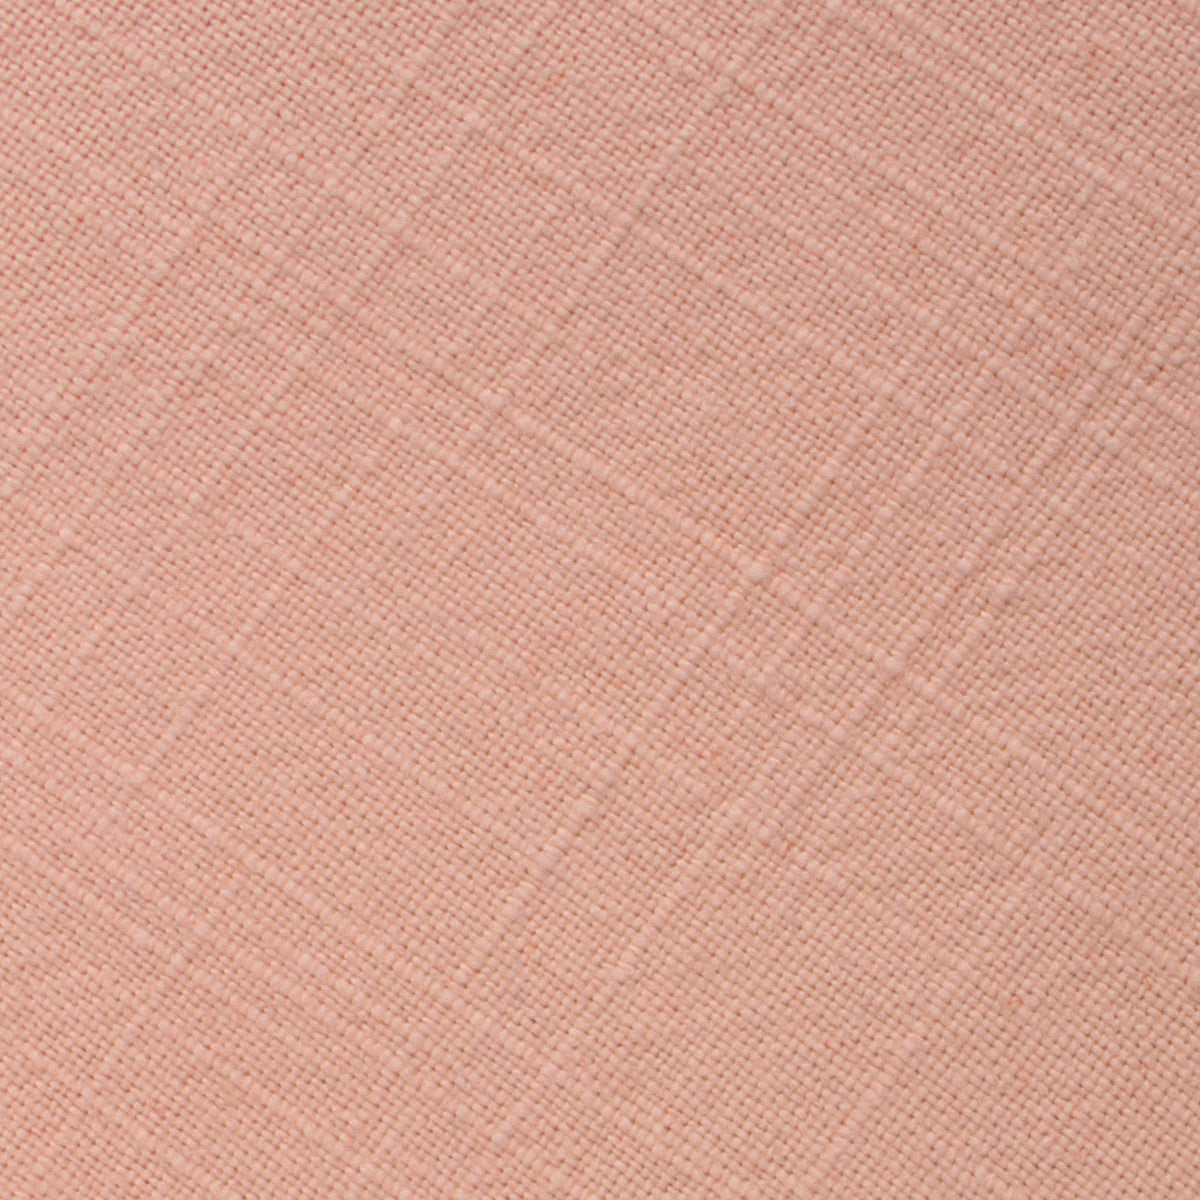 Paris Blush Pink Textured Vintage Linen Skinny Tie Fabric